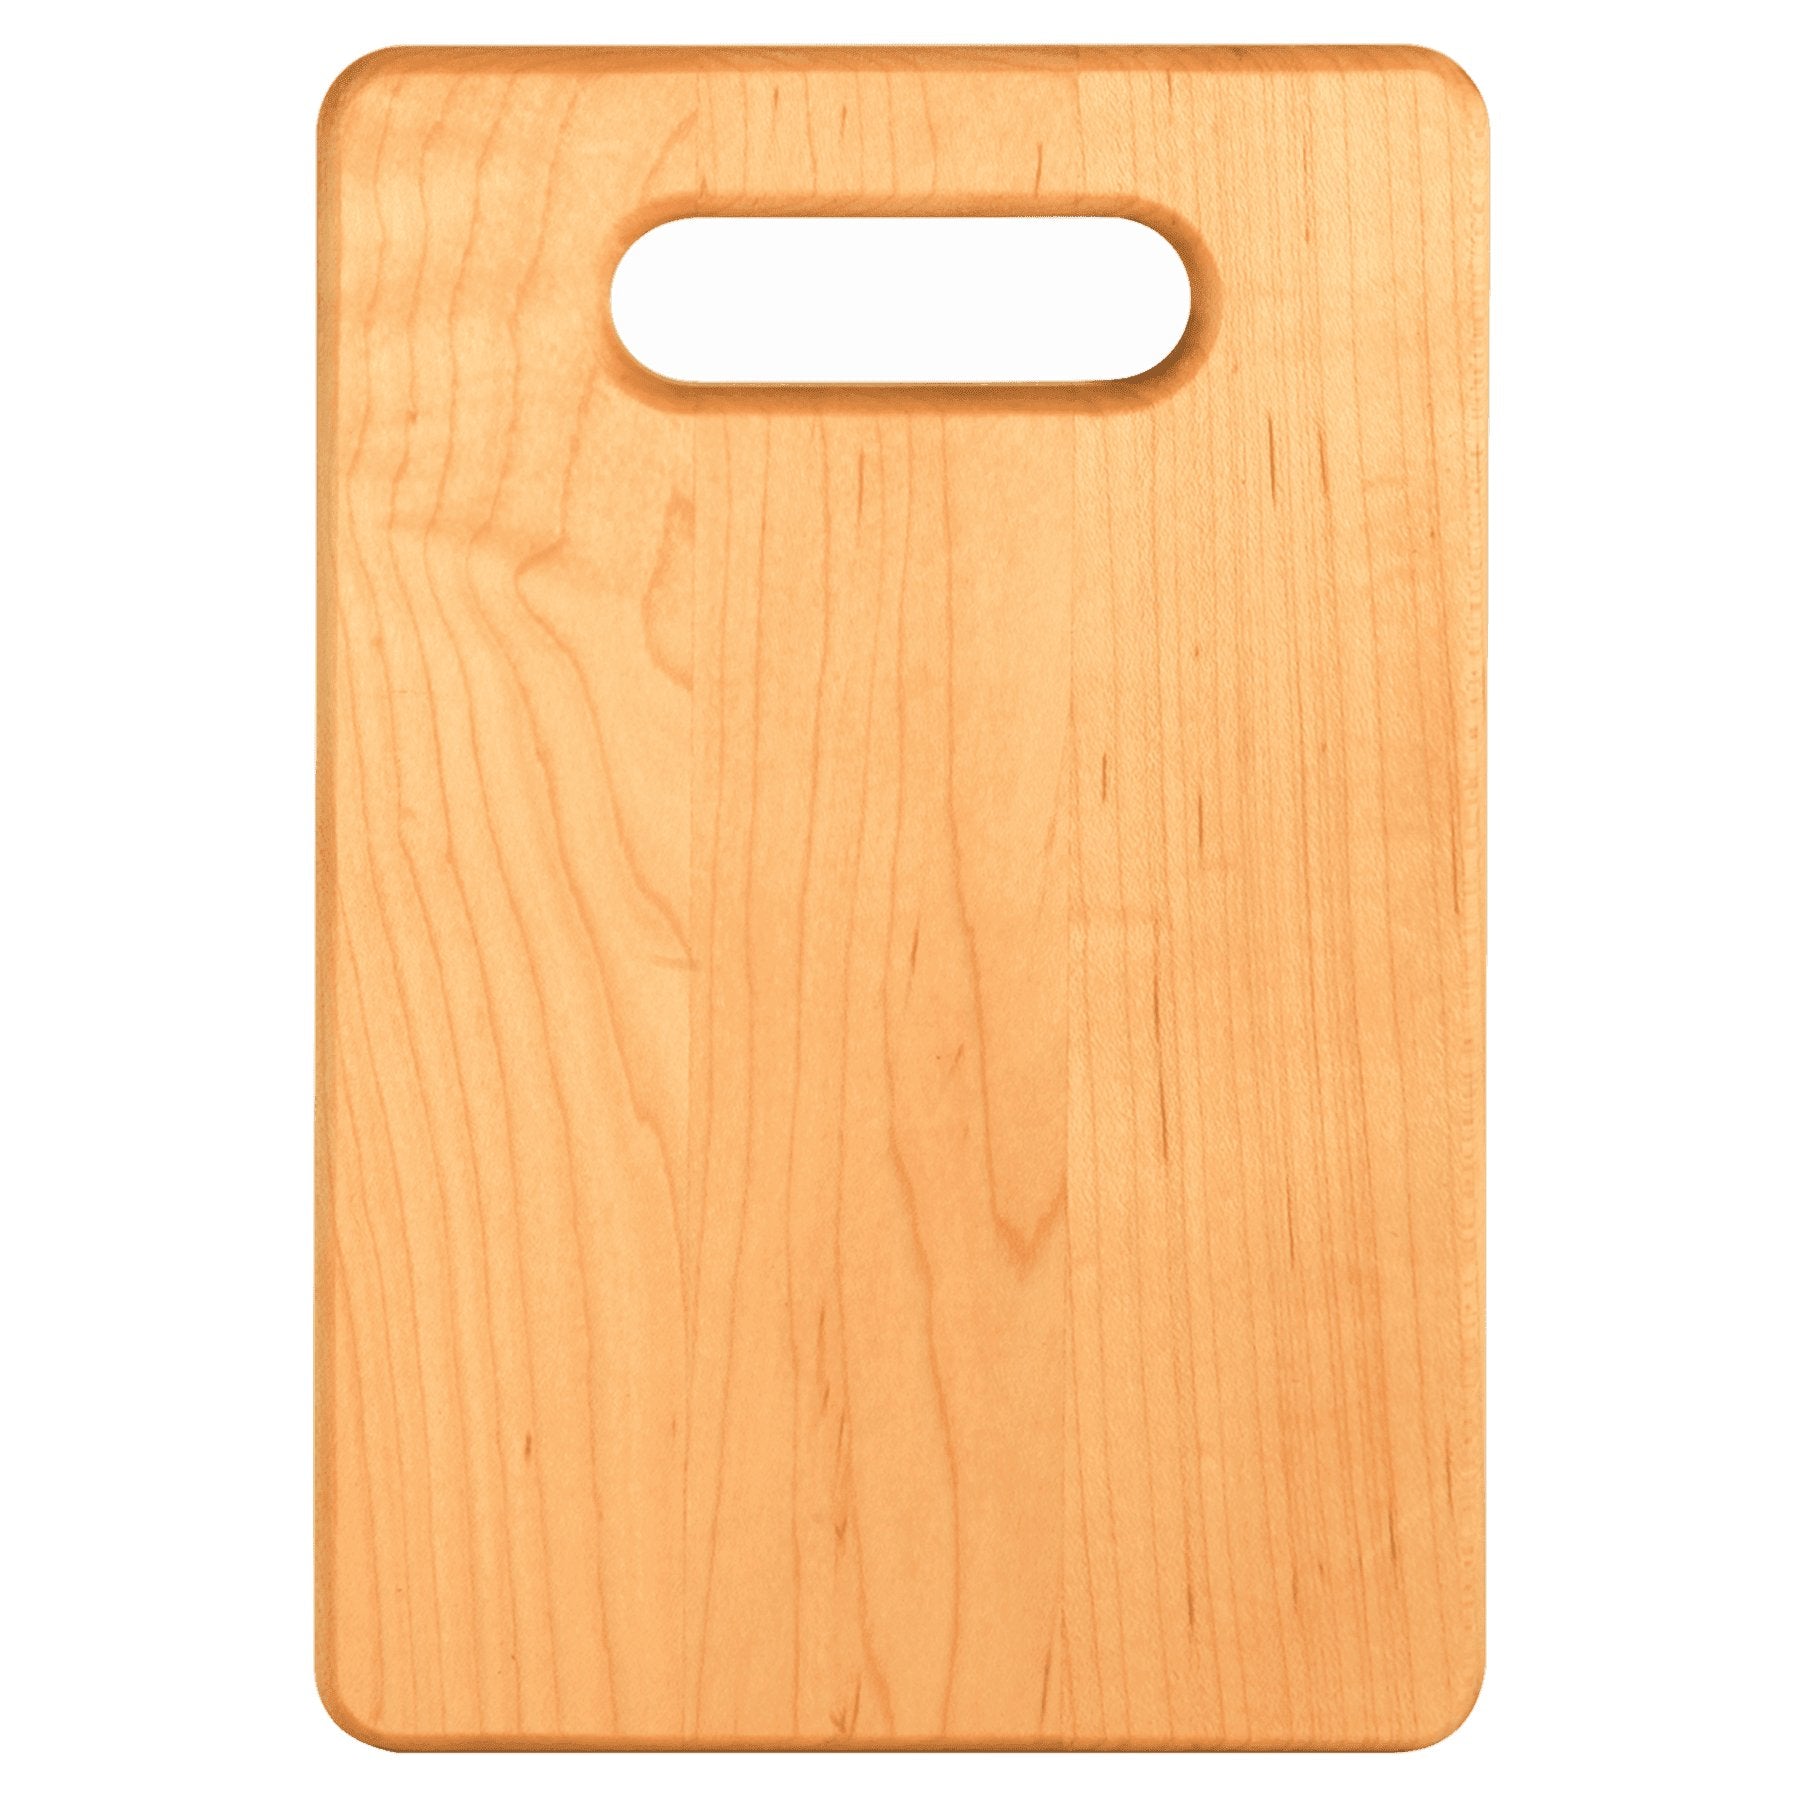 Engravable Maple Cutting Board - Legacy Creator Inc9 x 6